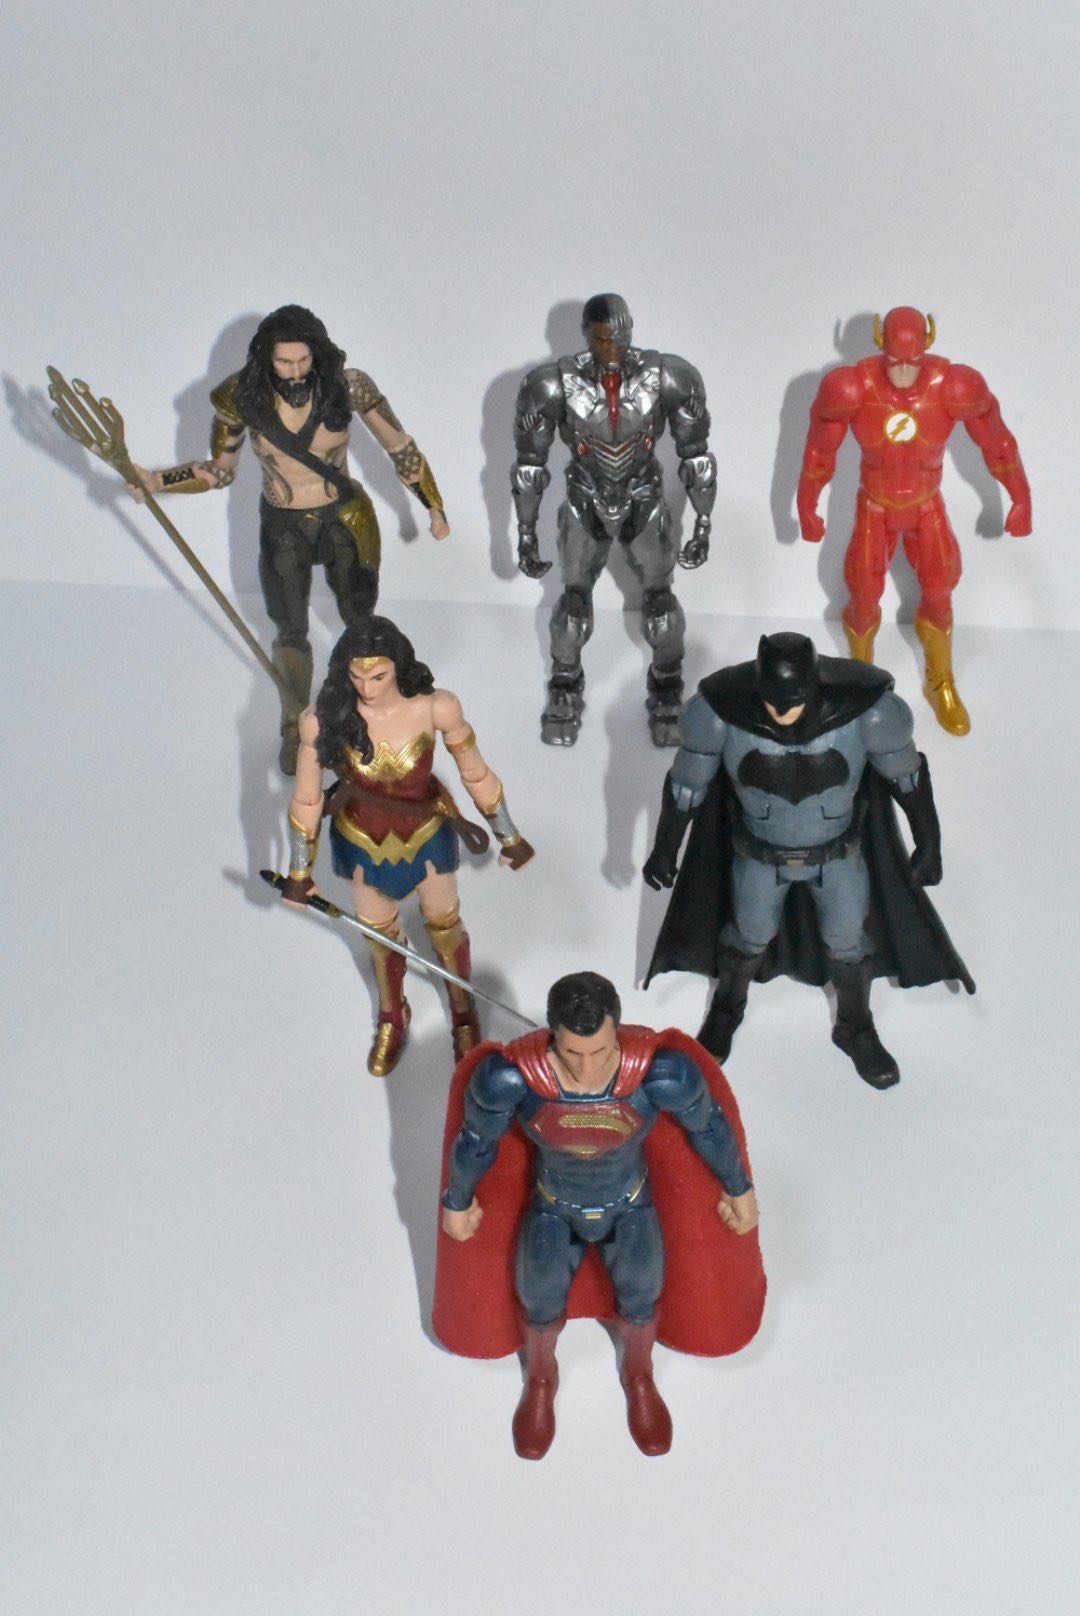 justice league 6 inch figures